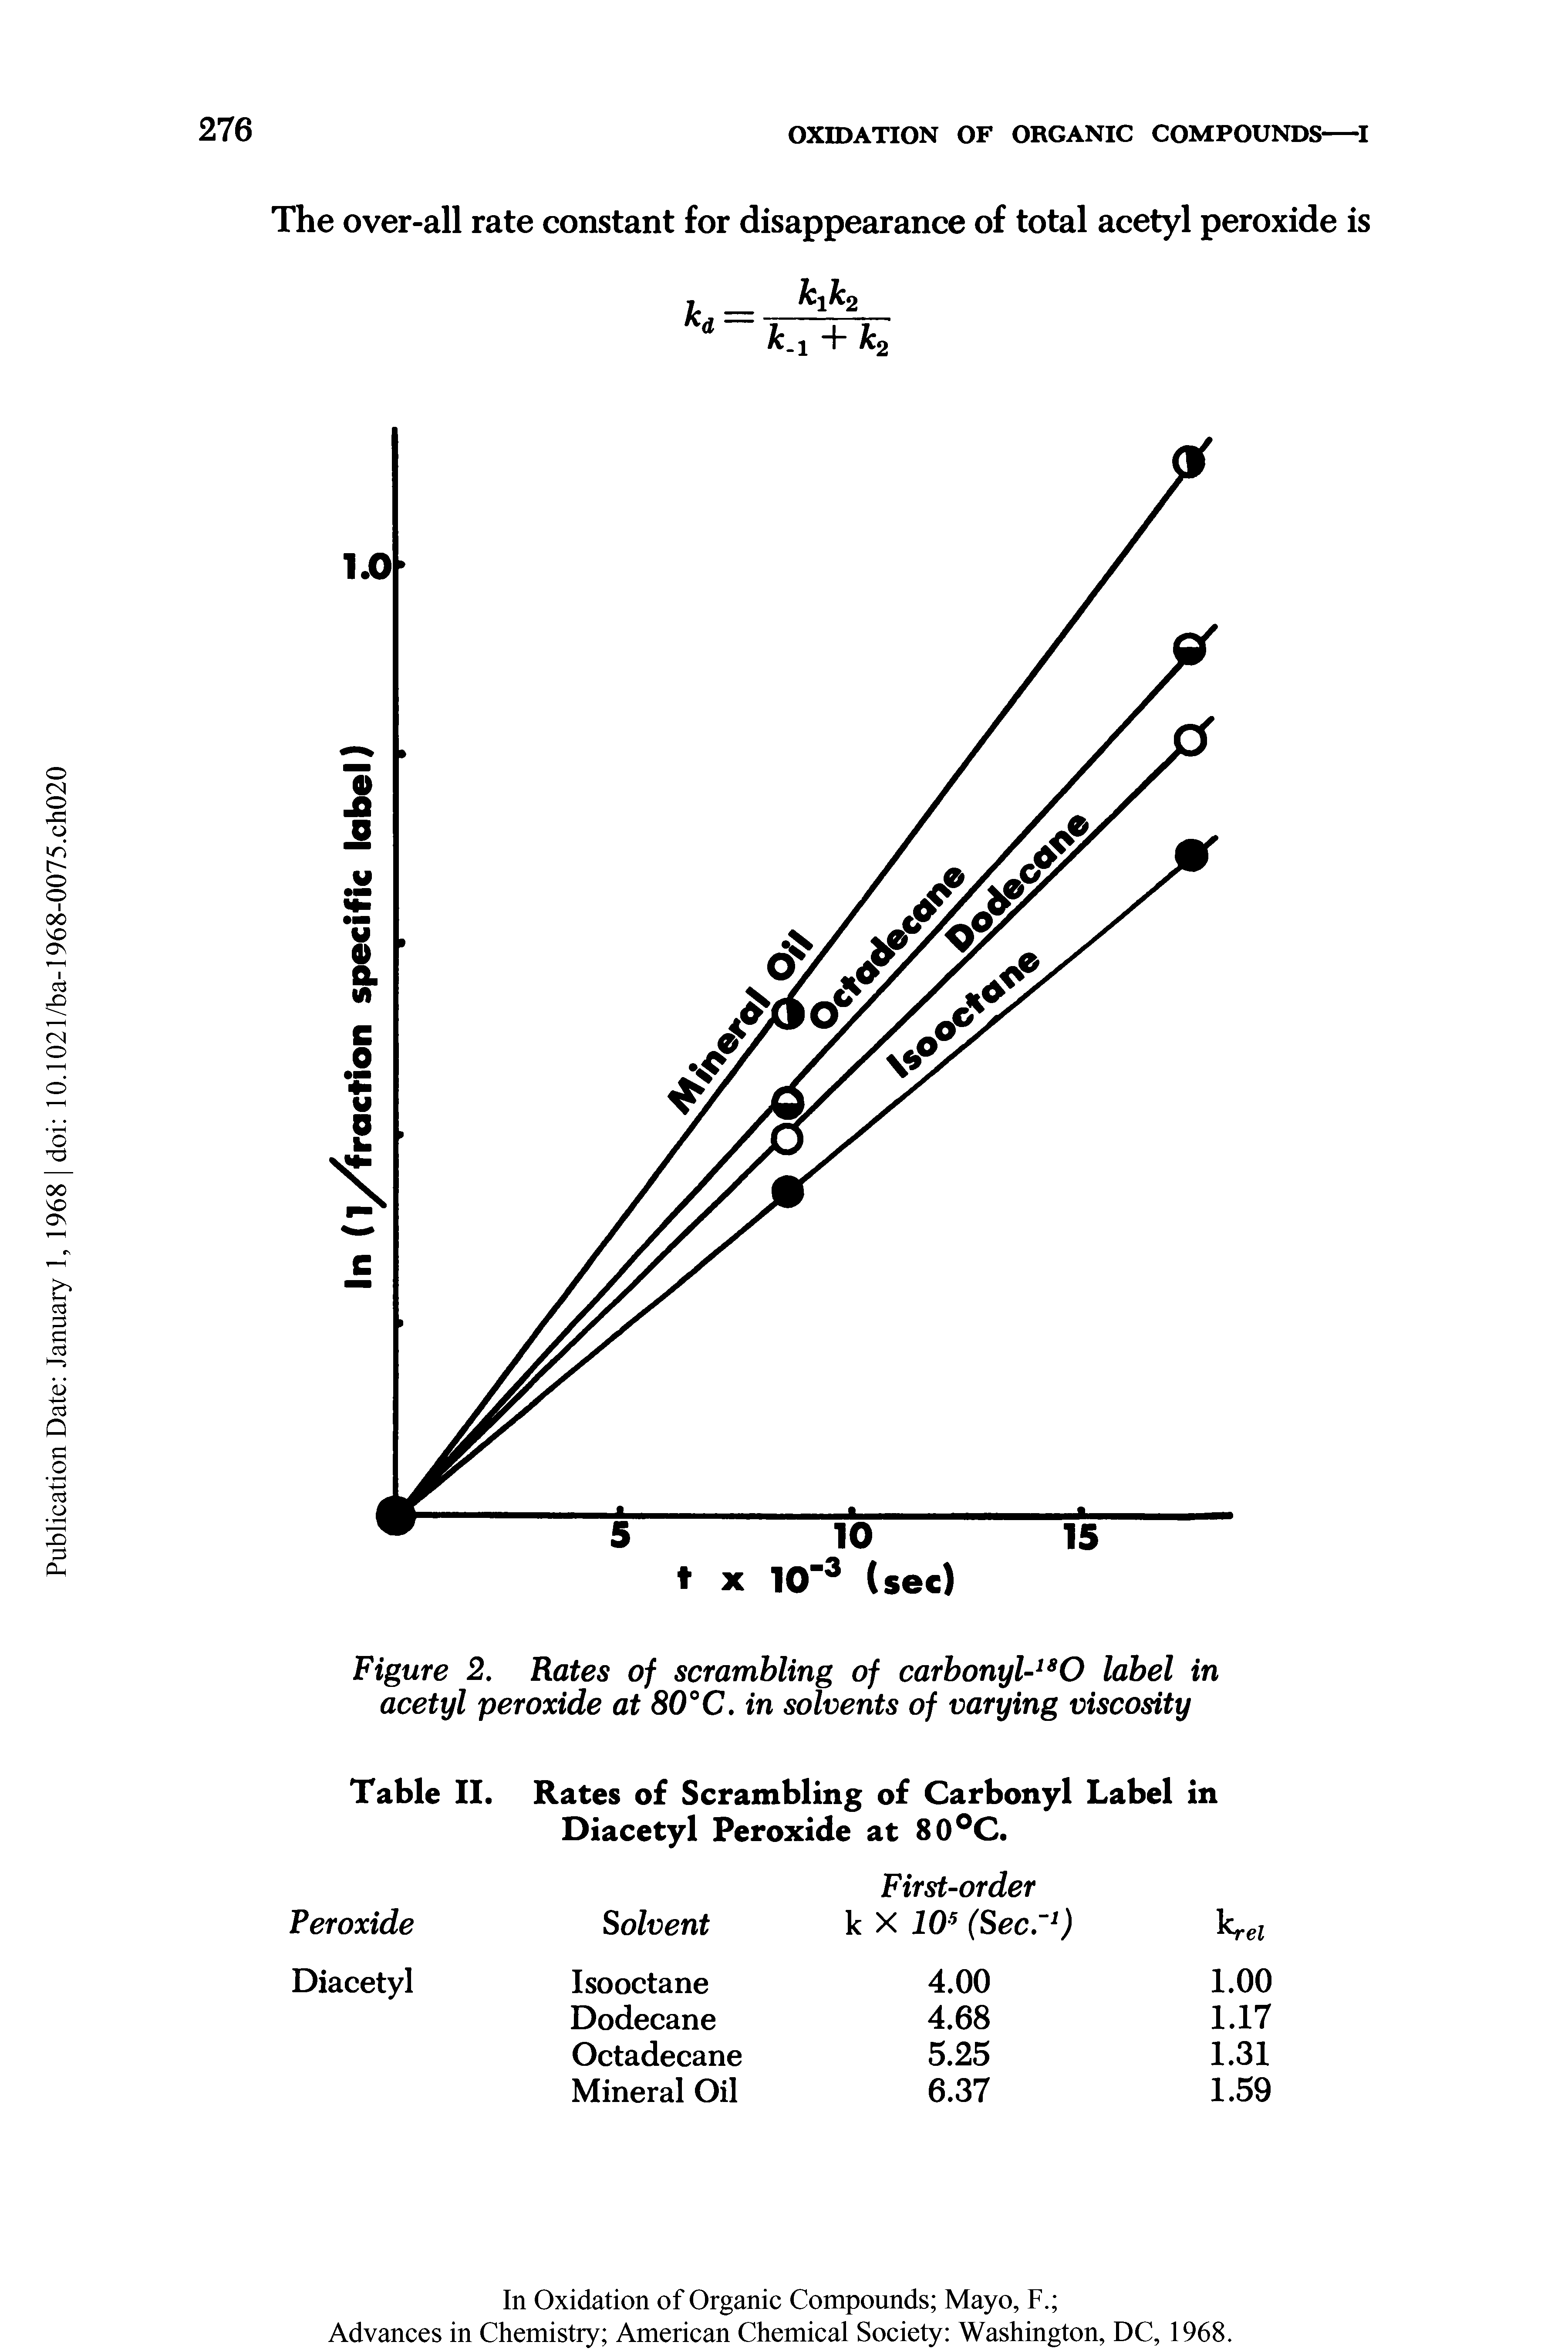 Table II. Rates of Scrambling of Carbonyl Label in Diacetyl Peroxide at 80°C.